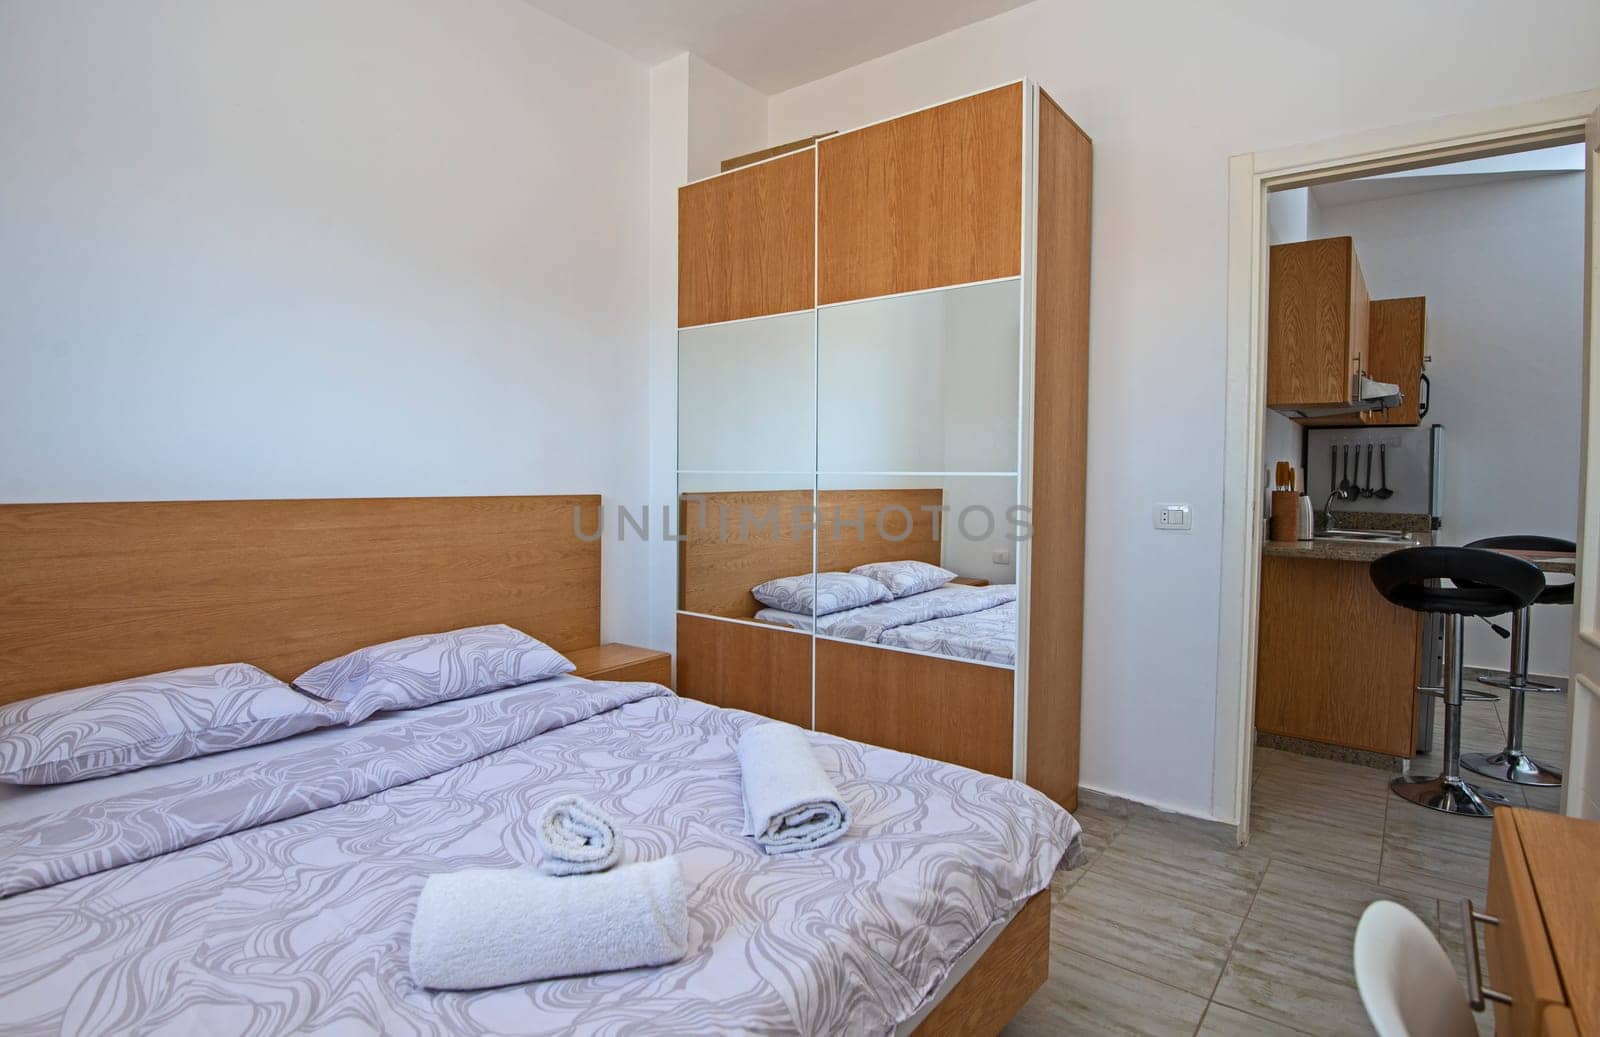 Interior design of bedroom in apartment with wardrobe by paulvinten